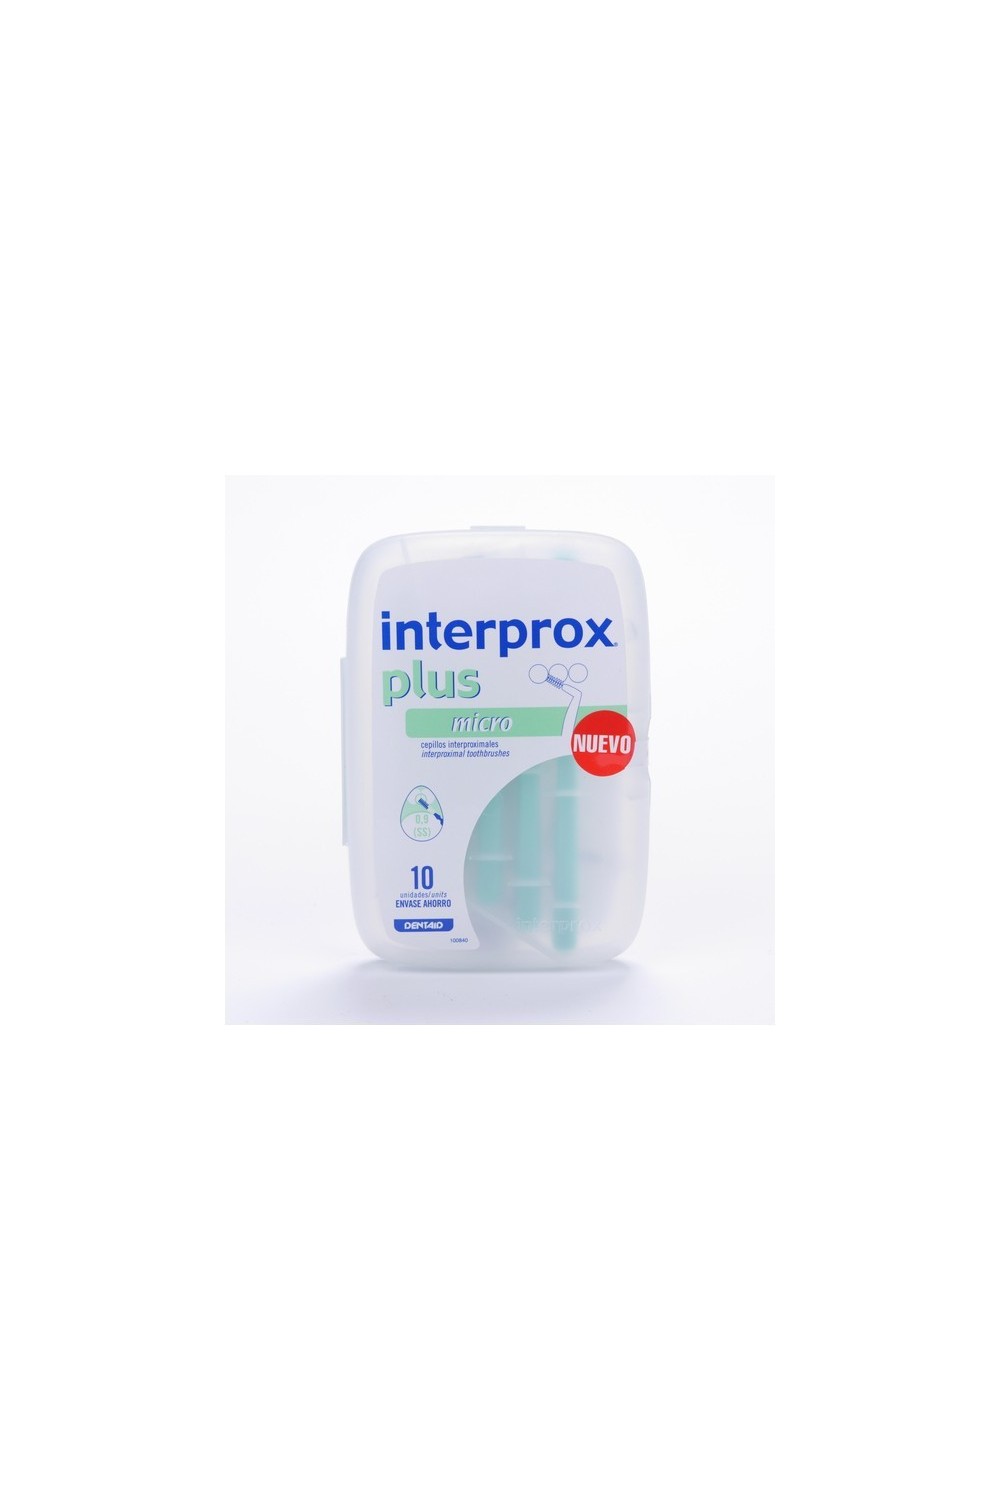 Interprox Plus Micro 10 Cepillos Interproximales